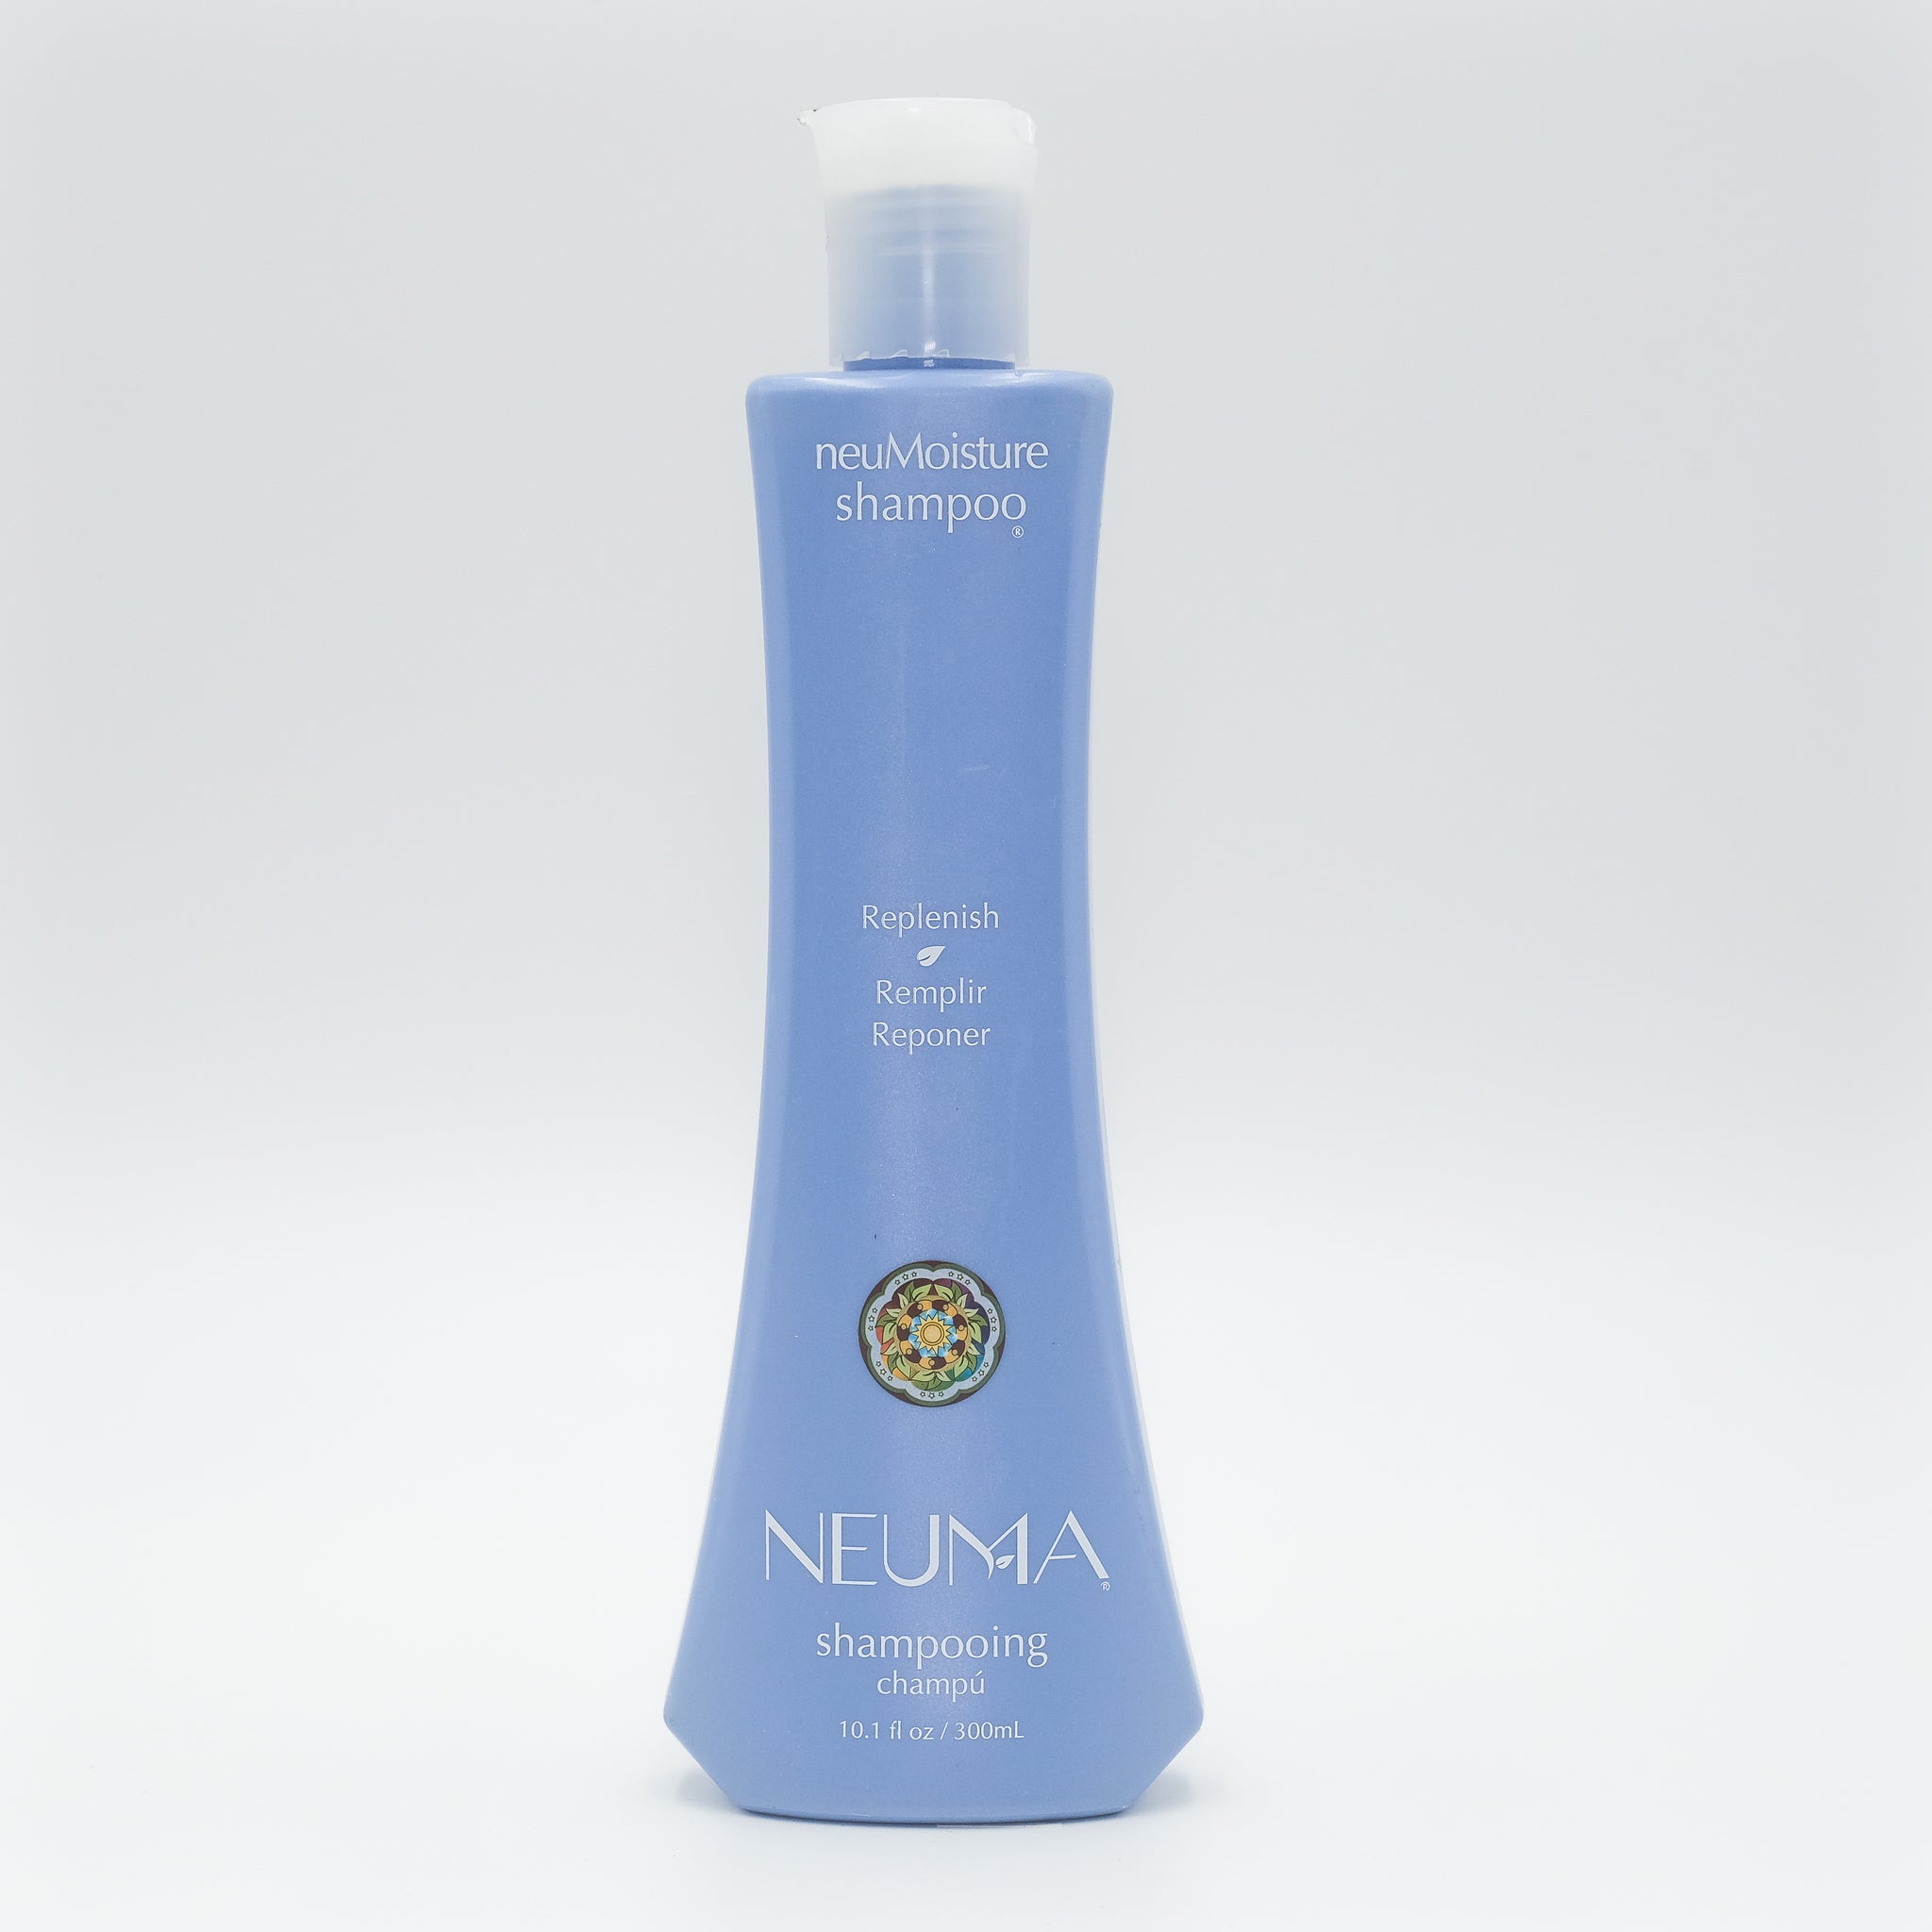 NEUMA NewMoisture Shampoo Replenish Shampoo 10.1 oz